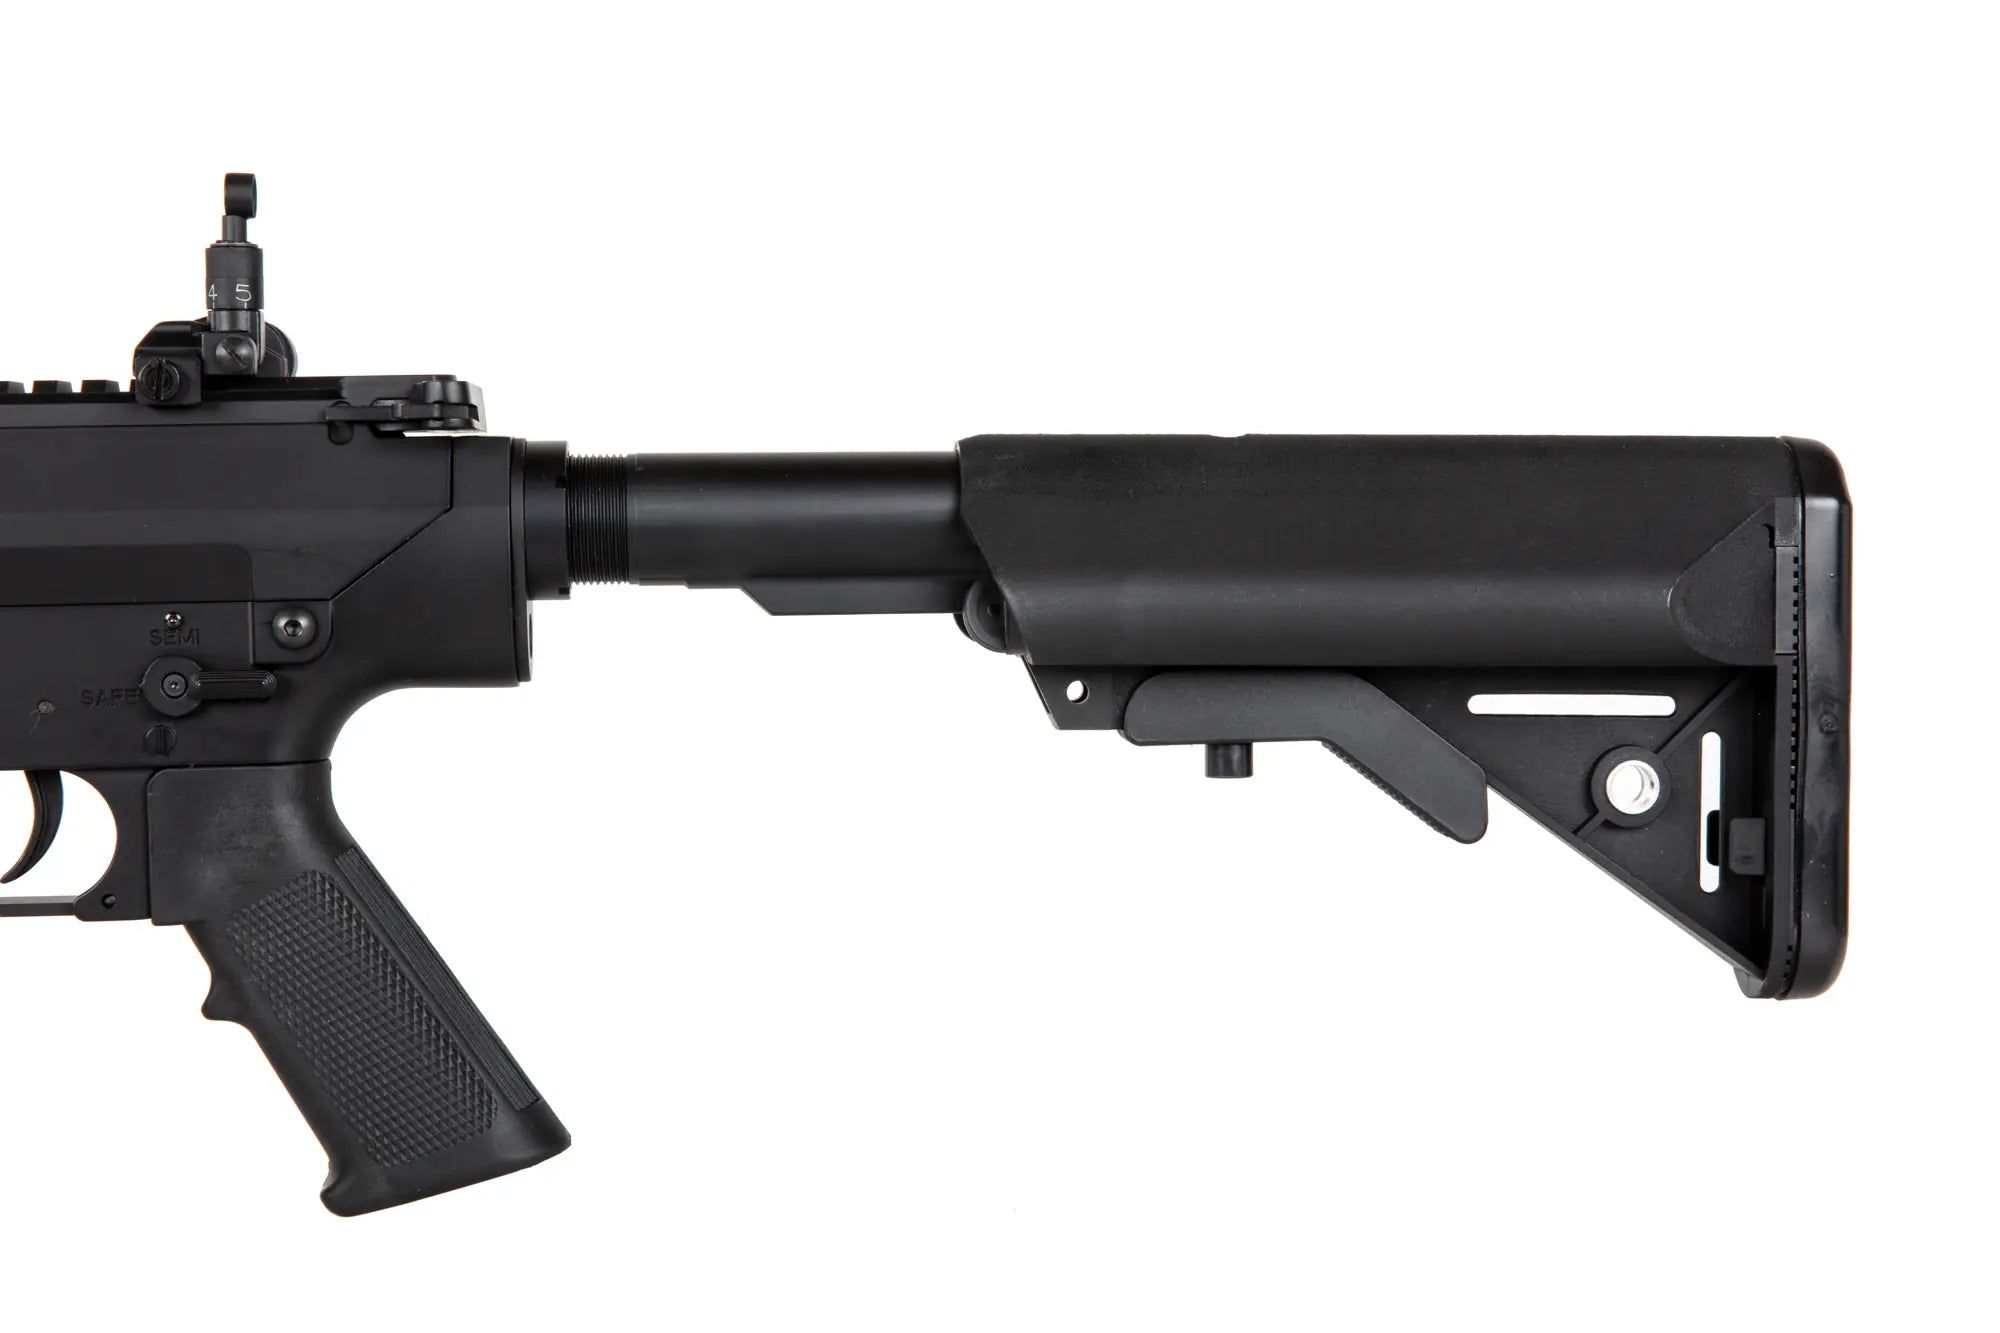 Airsoft rifle SR25 DMR extendible stock